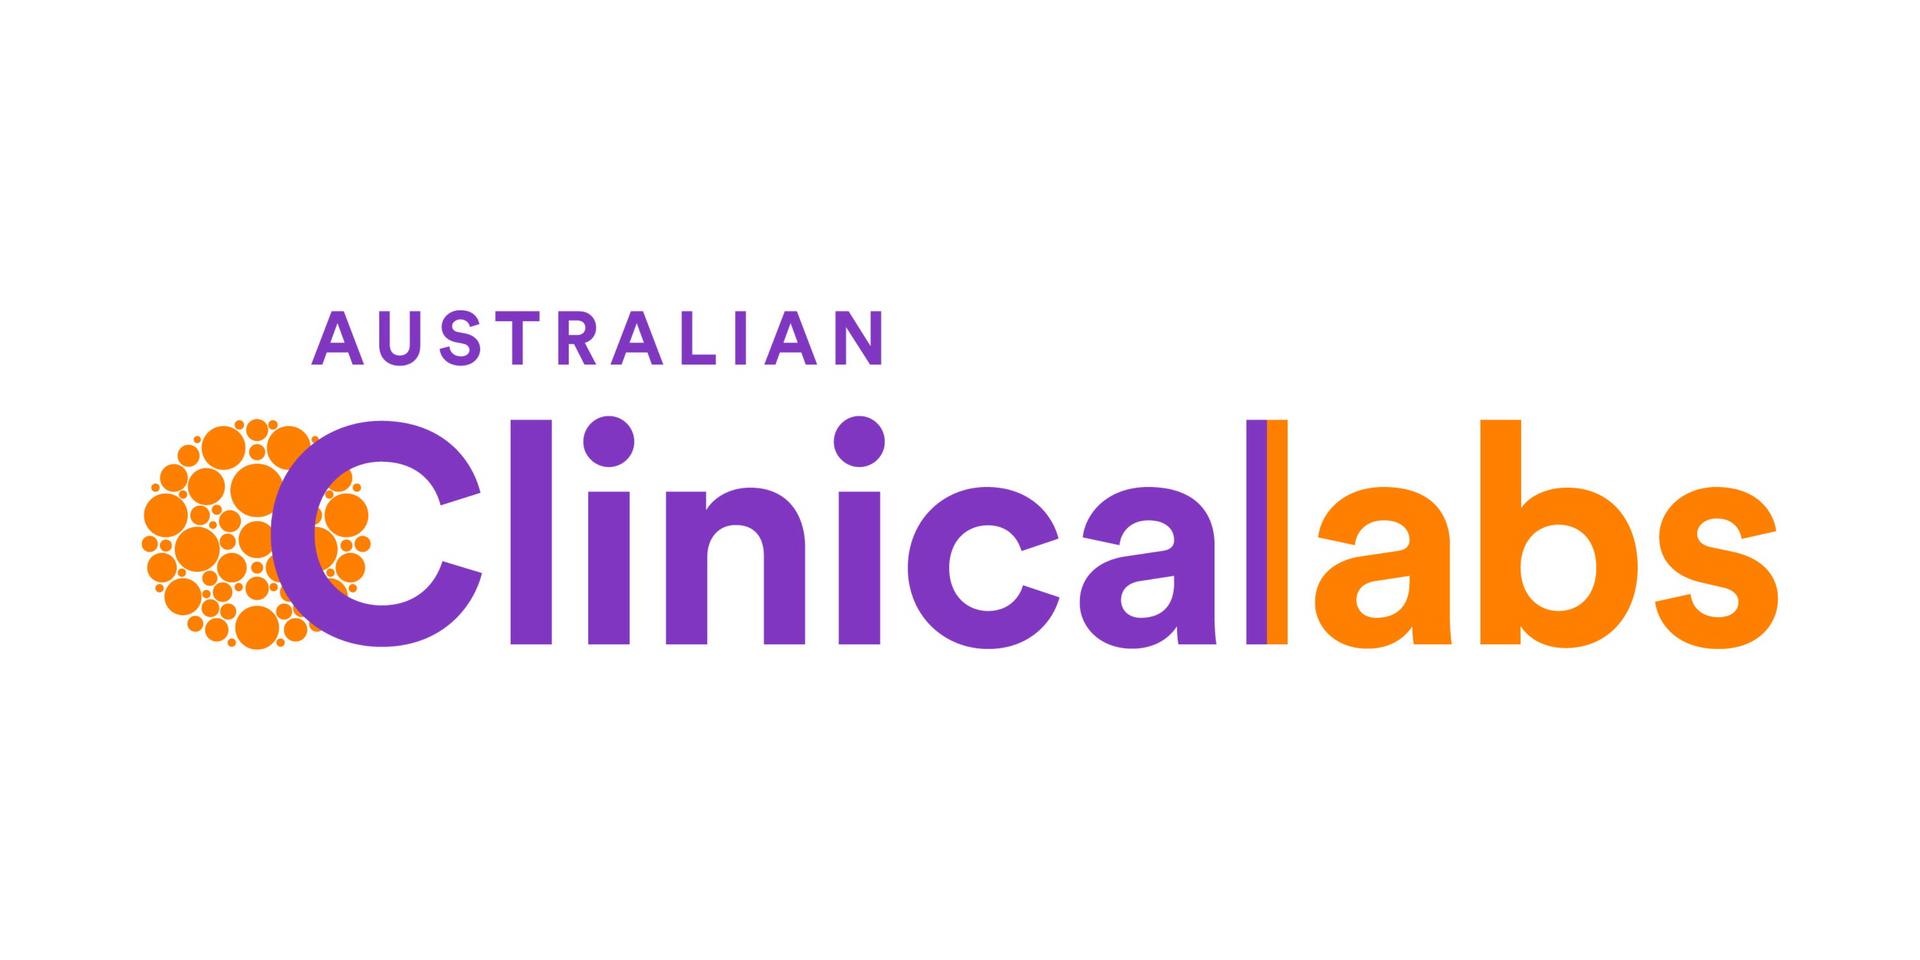 Australian Clinical Labs | Aberfoyle Park Family Practice